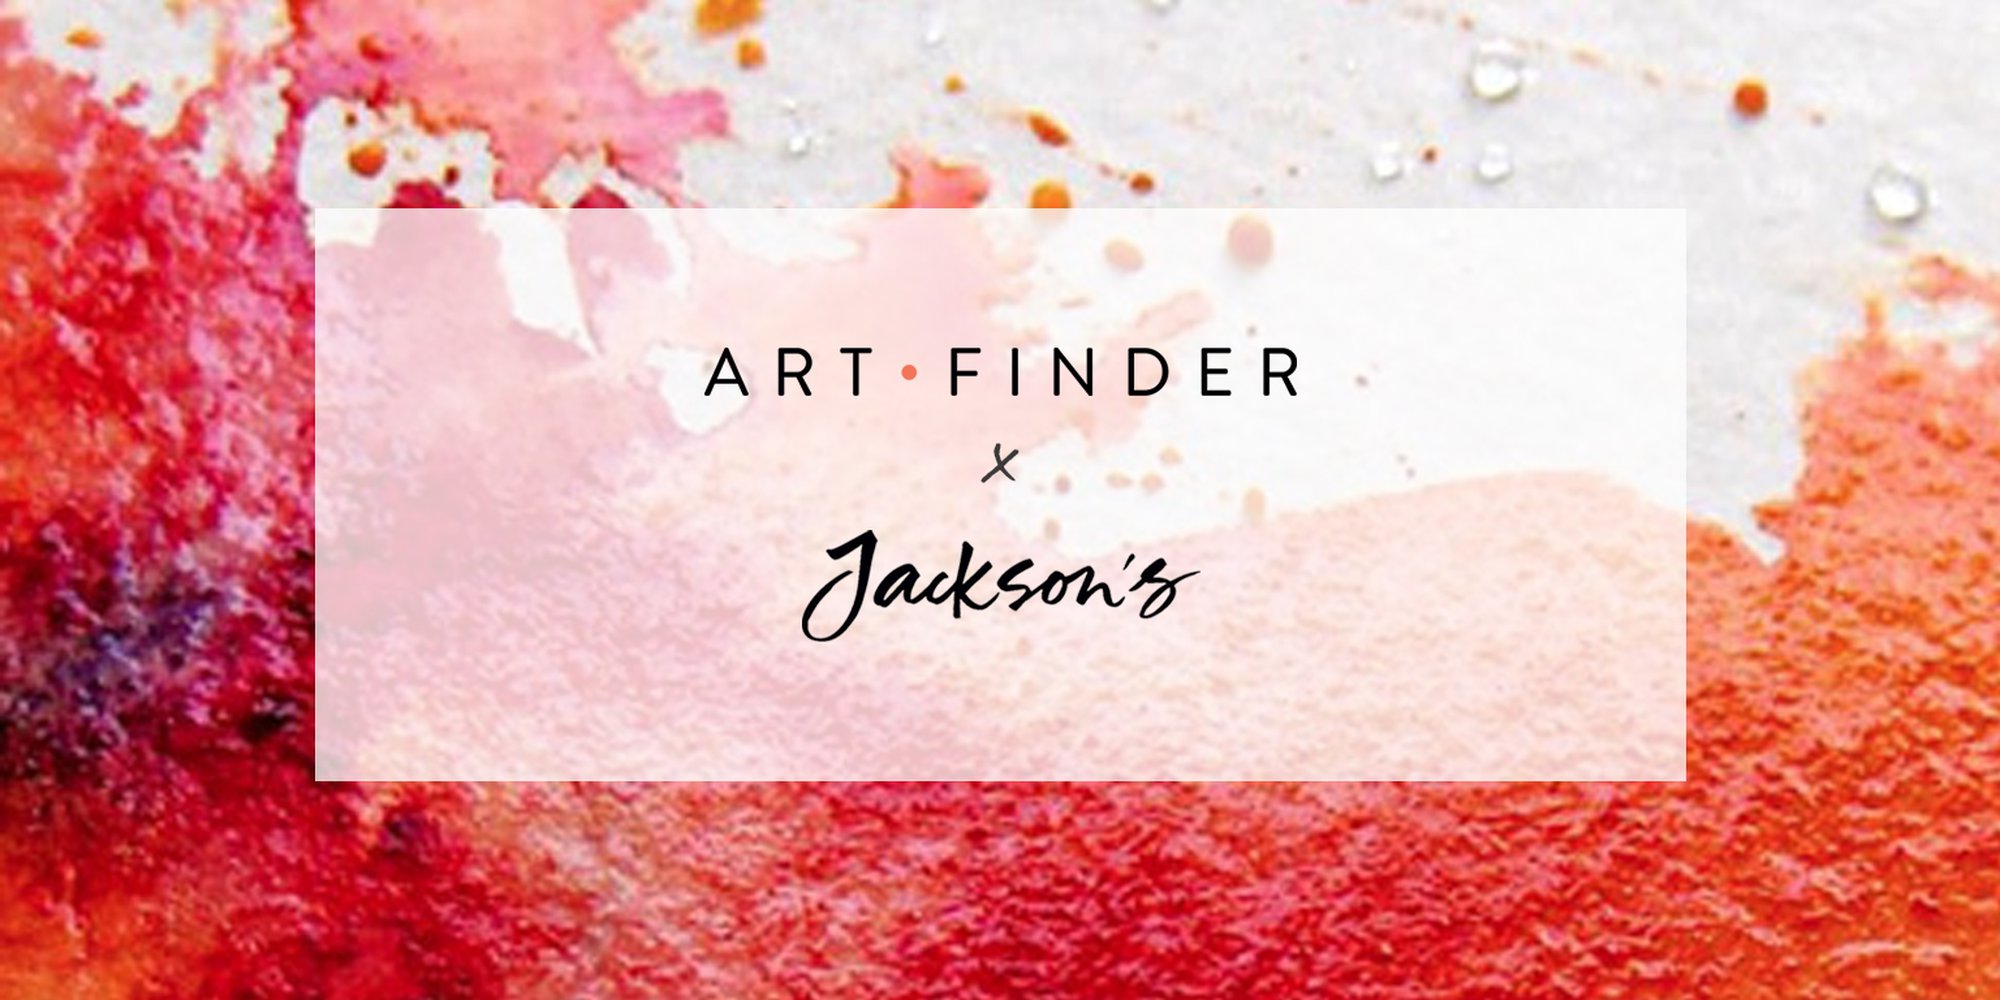 Artfinder partners with international art supplier Jackson's